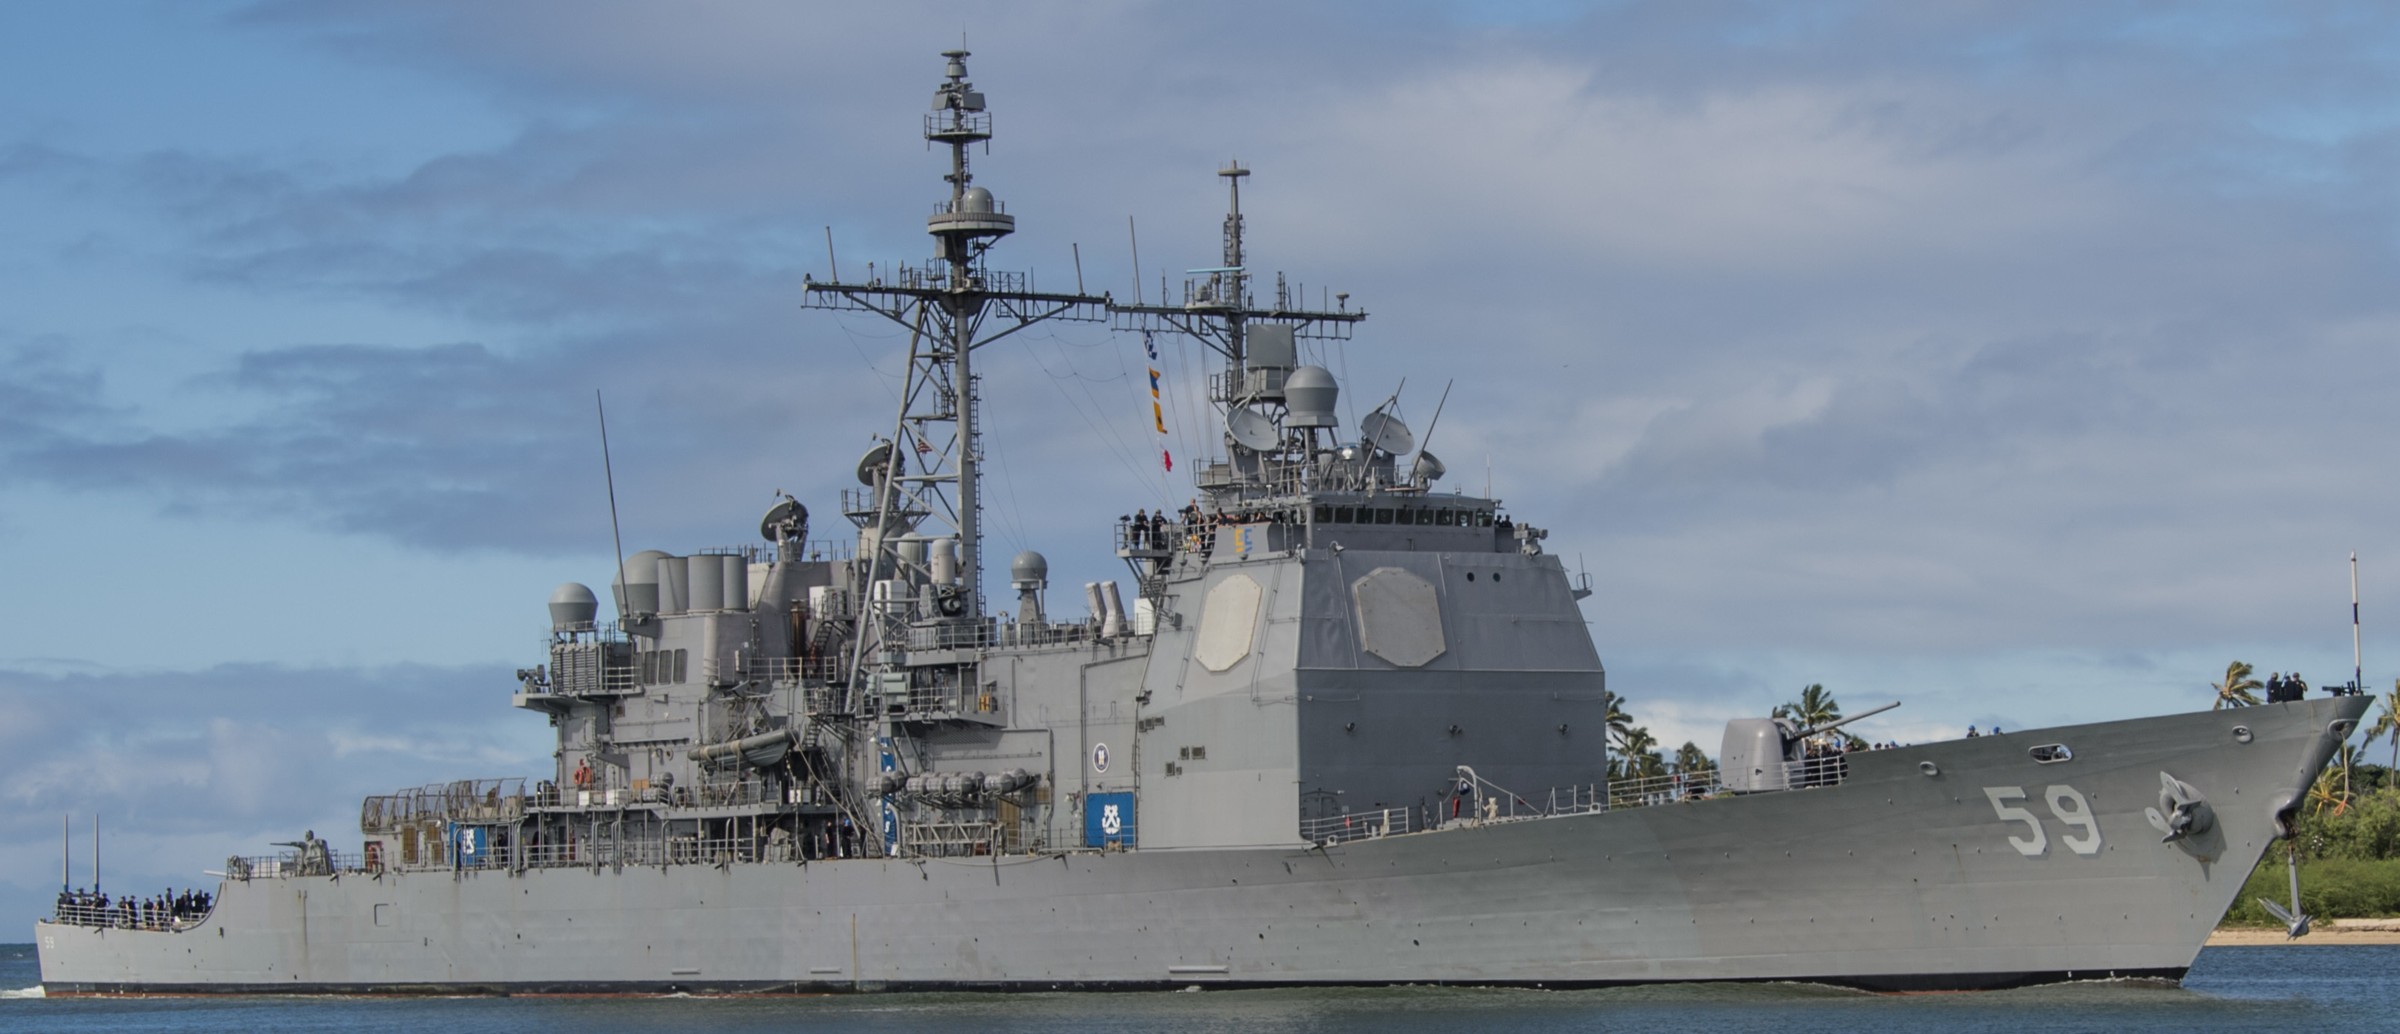 cg-59 uss princeton ticonderoga class guided missile cruiser aegis us navy joint base pearl harbor hickam hawaii 58